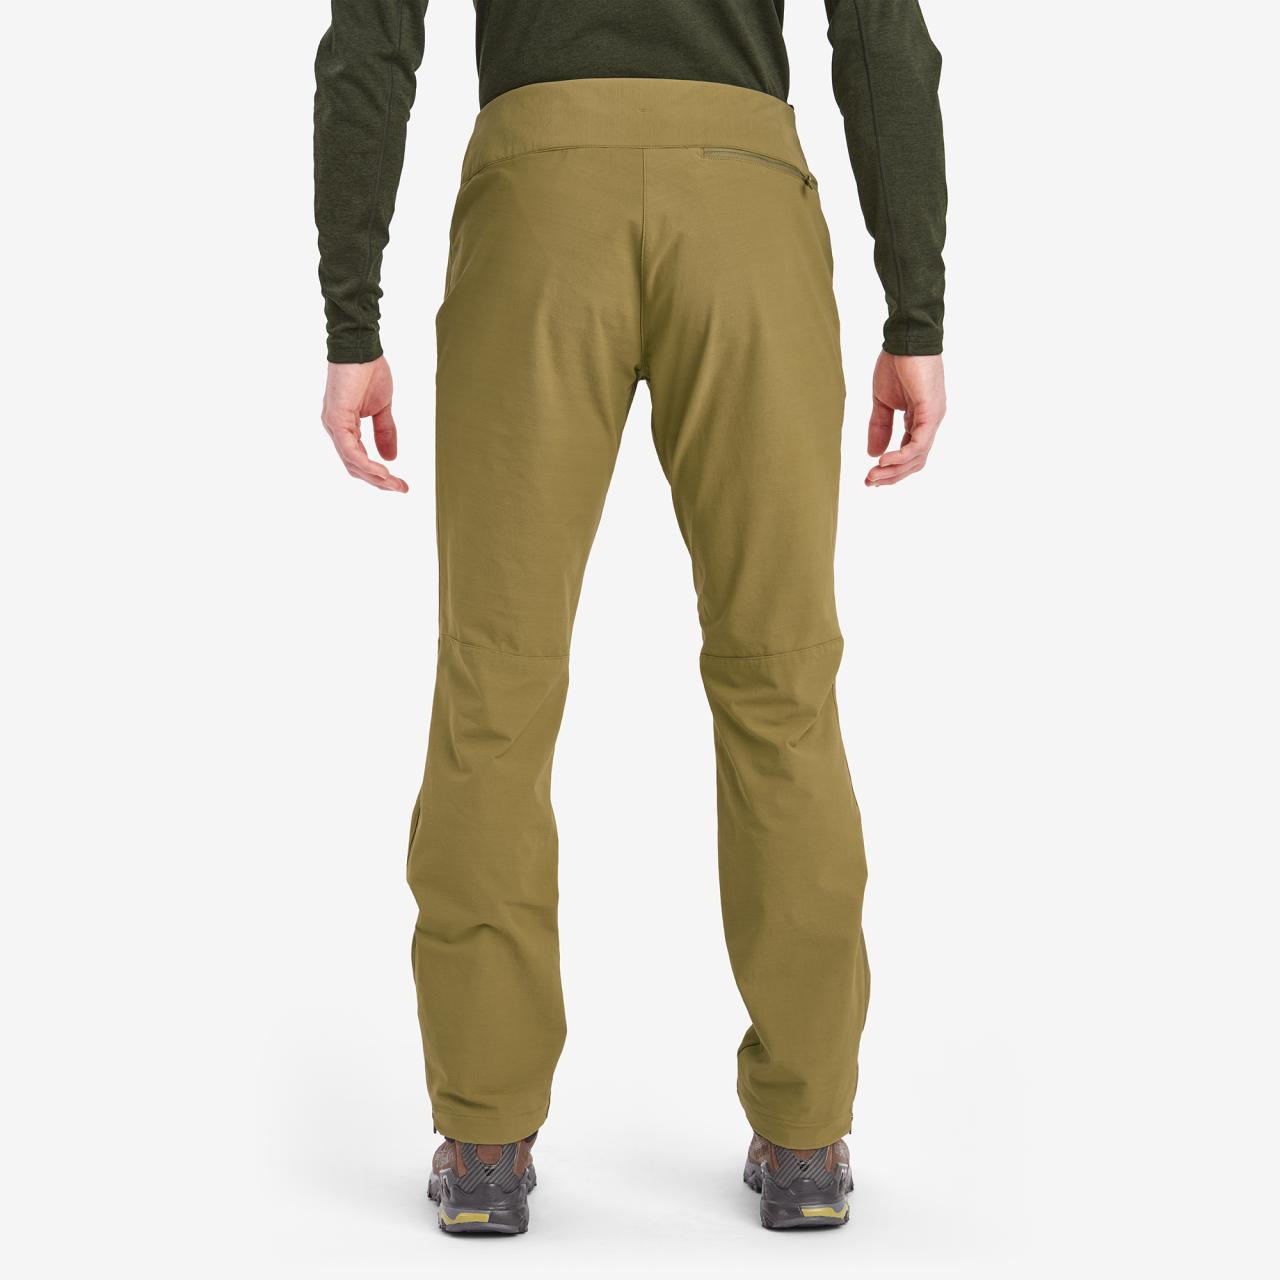 TENACITY PANTS REG LEG-OLIVE-30/S pánské kalhoty zelené